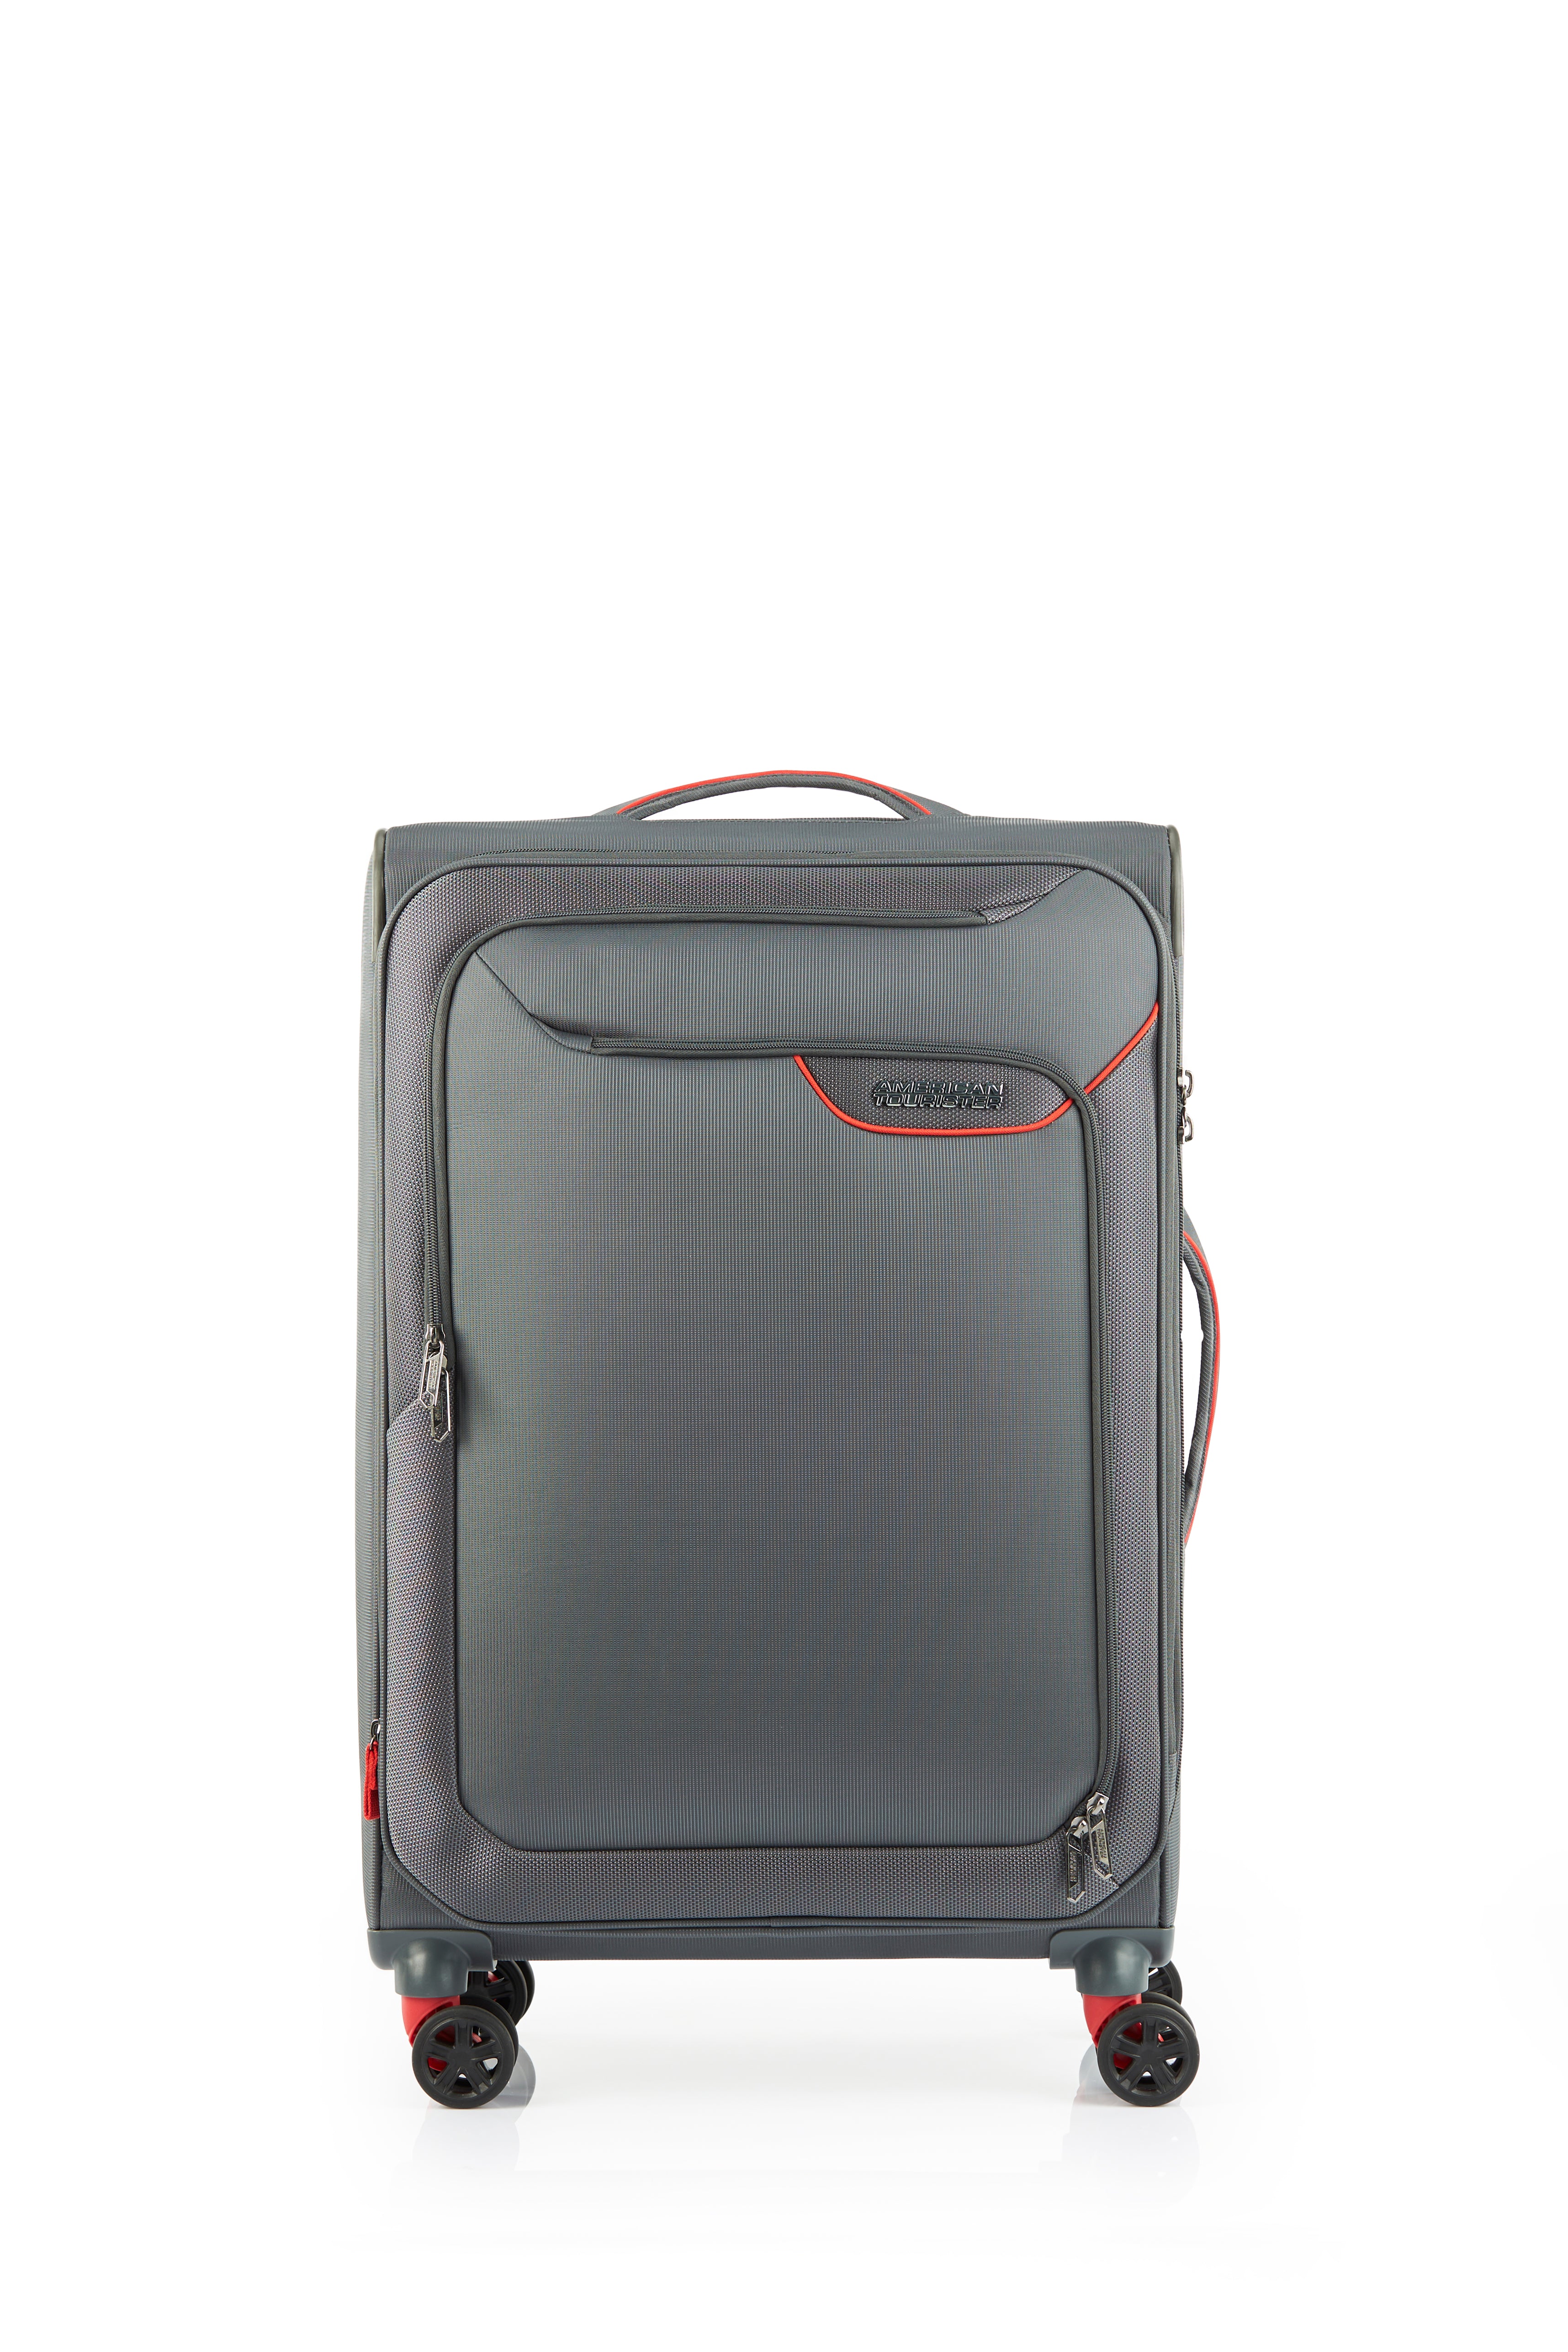 American Tourister - Applite ECO 71cm Medium Suitcase - Grey/Red-2